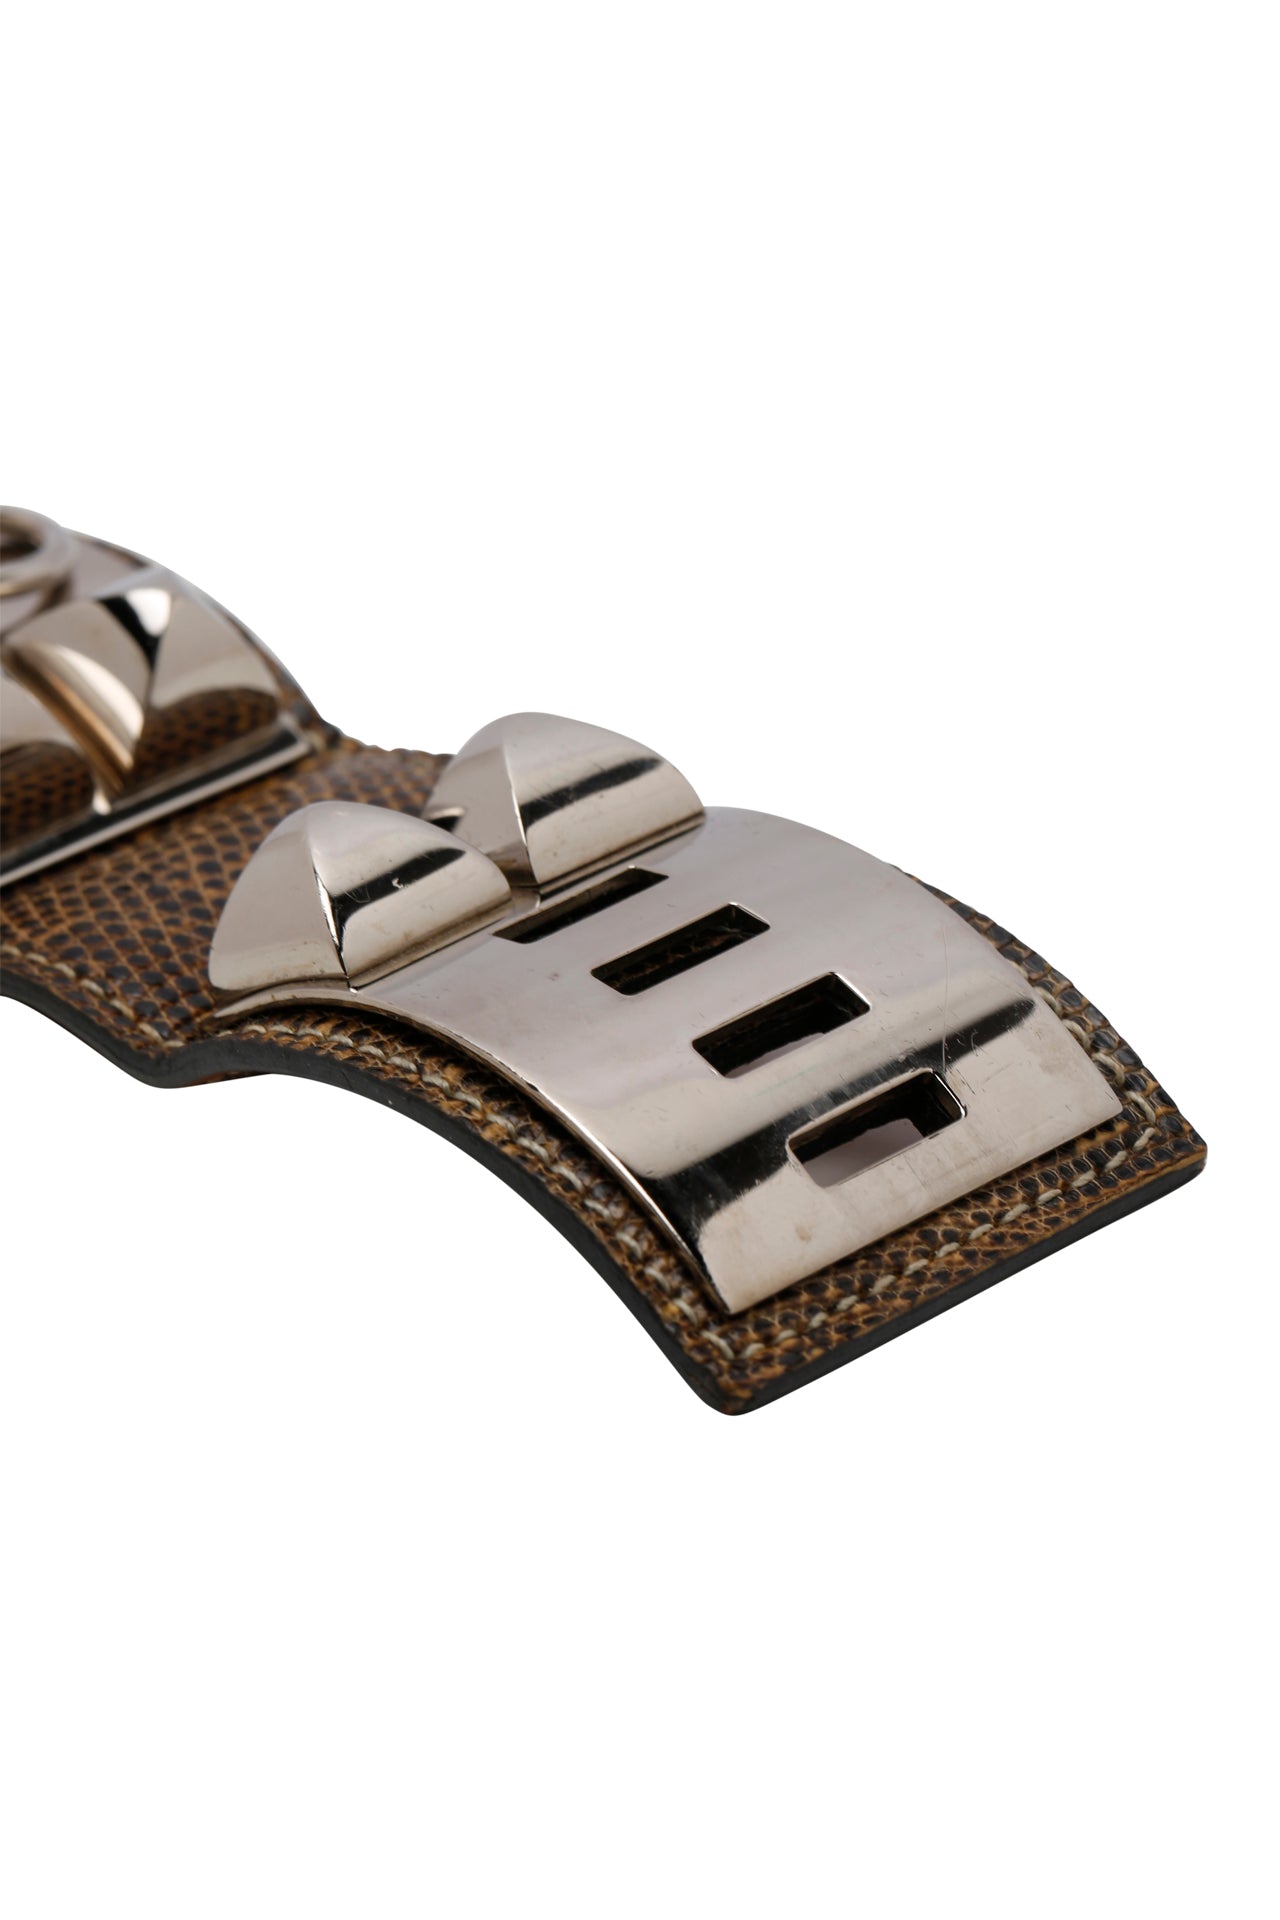 Hermès Lizard Collier de Chien Leather Wide Bracelet Brown